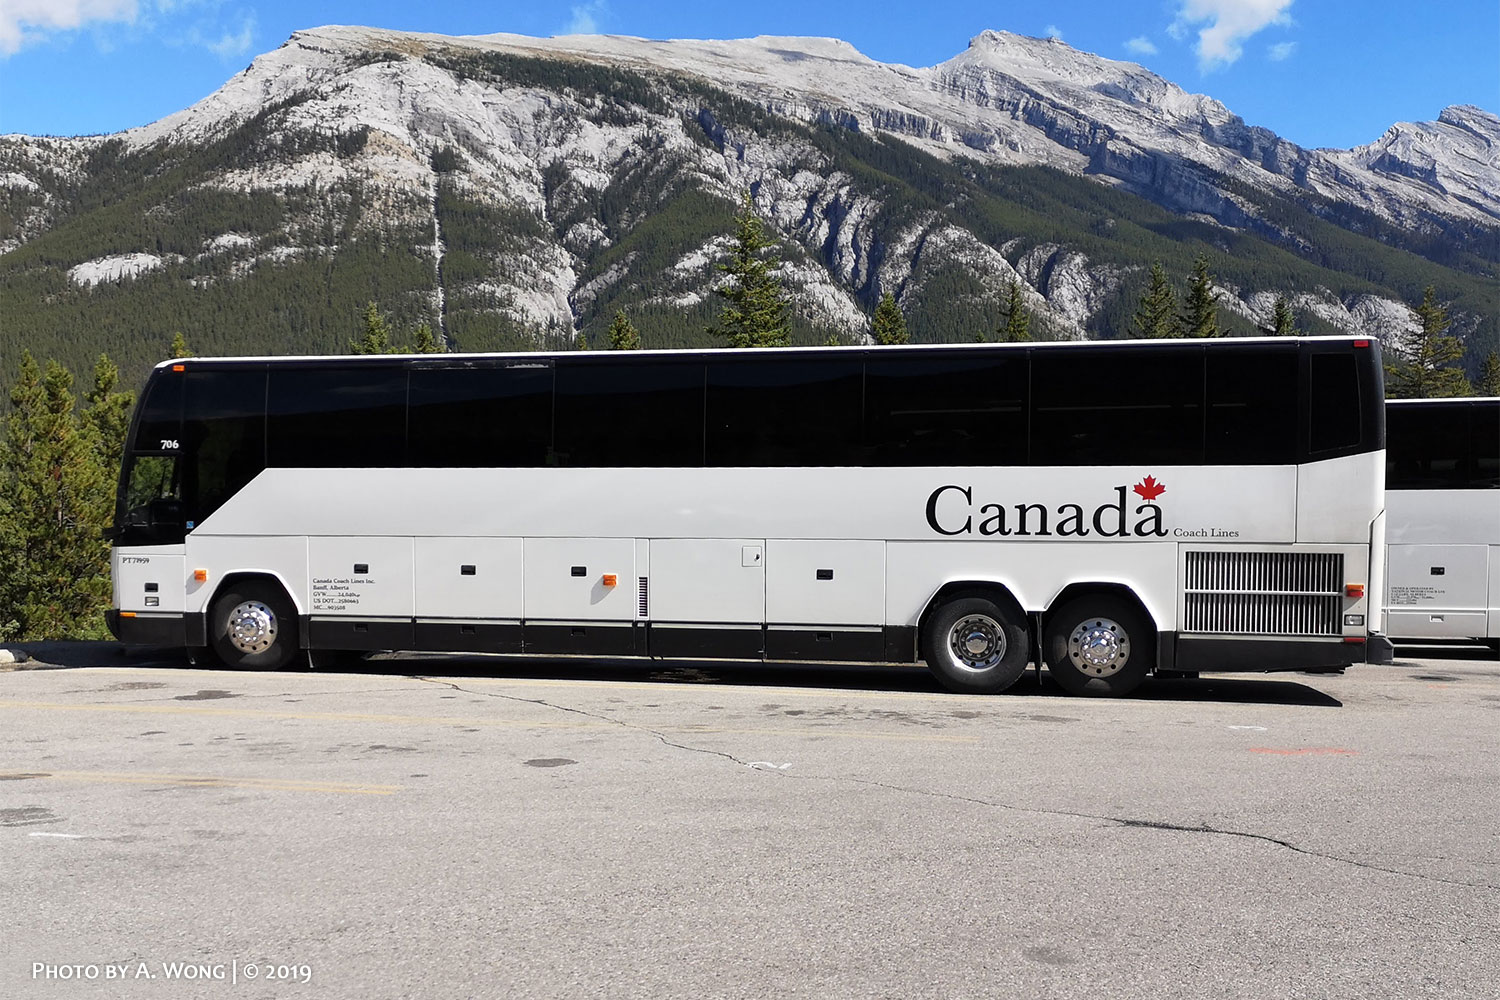 Canada_Coach_Lines_Banff_706-a.jpg